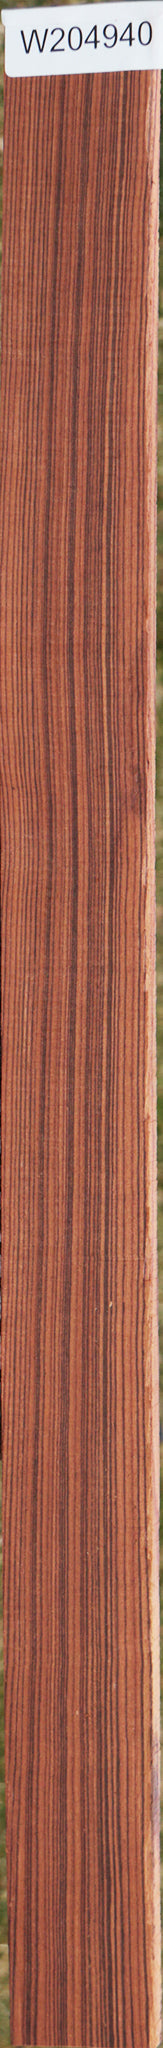 Quartersawn Kingwood Micro Lumber